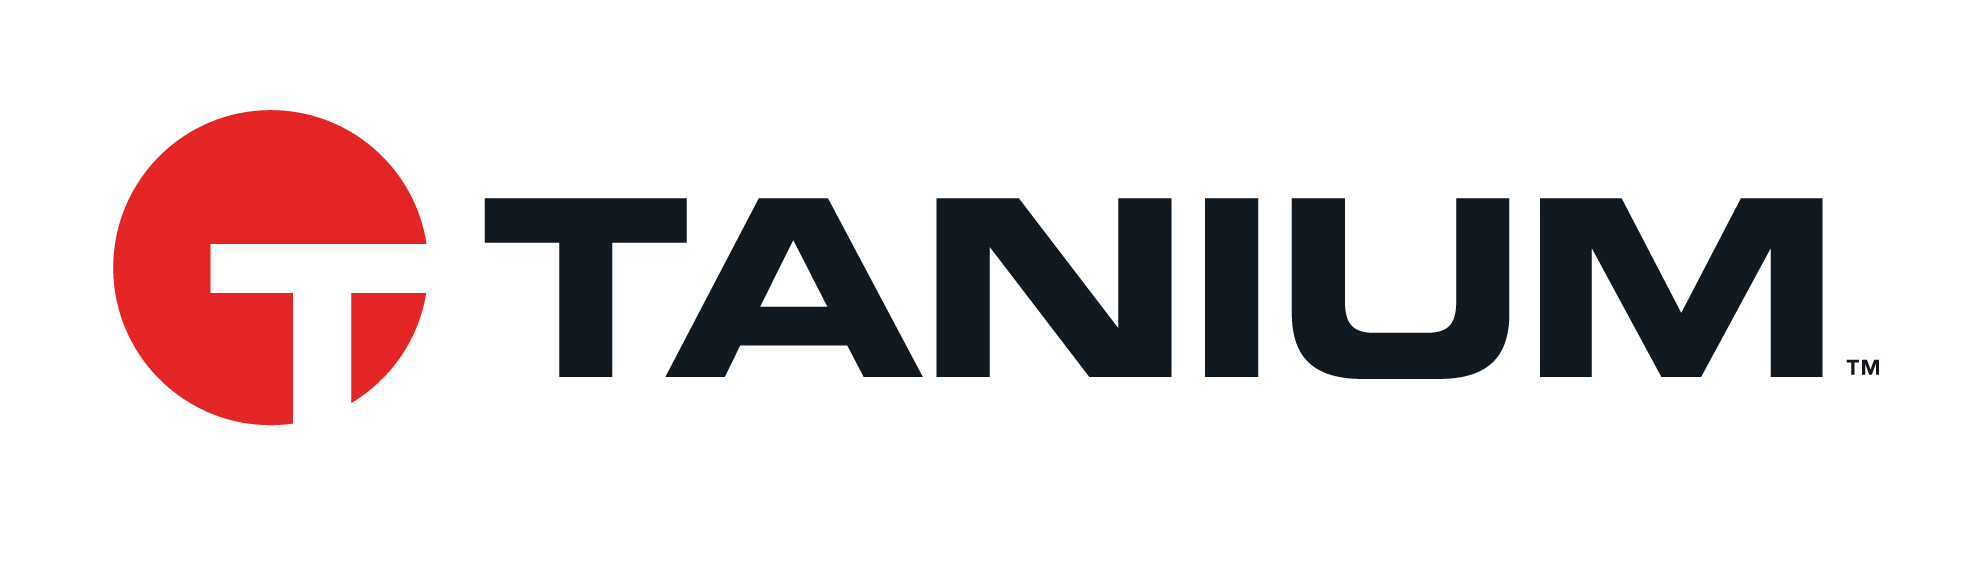 Tanium brand logo